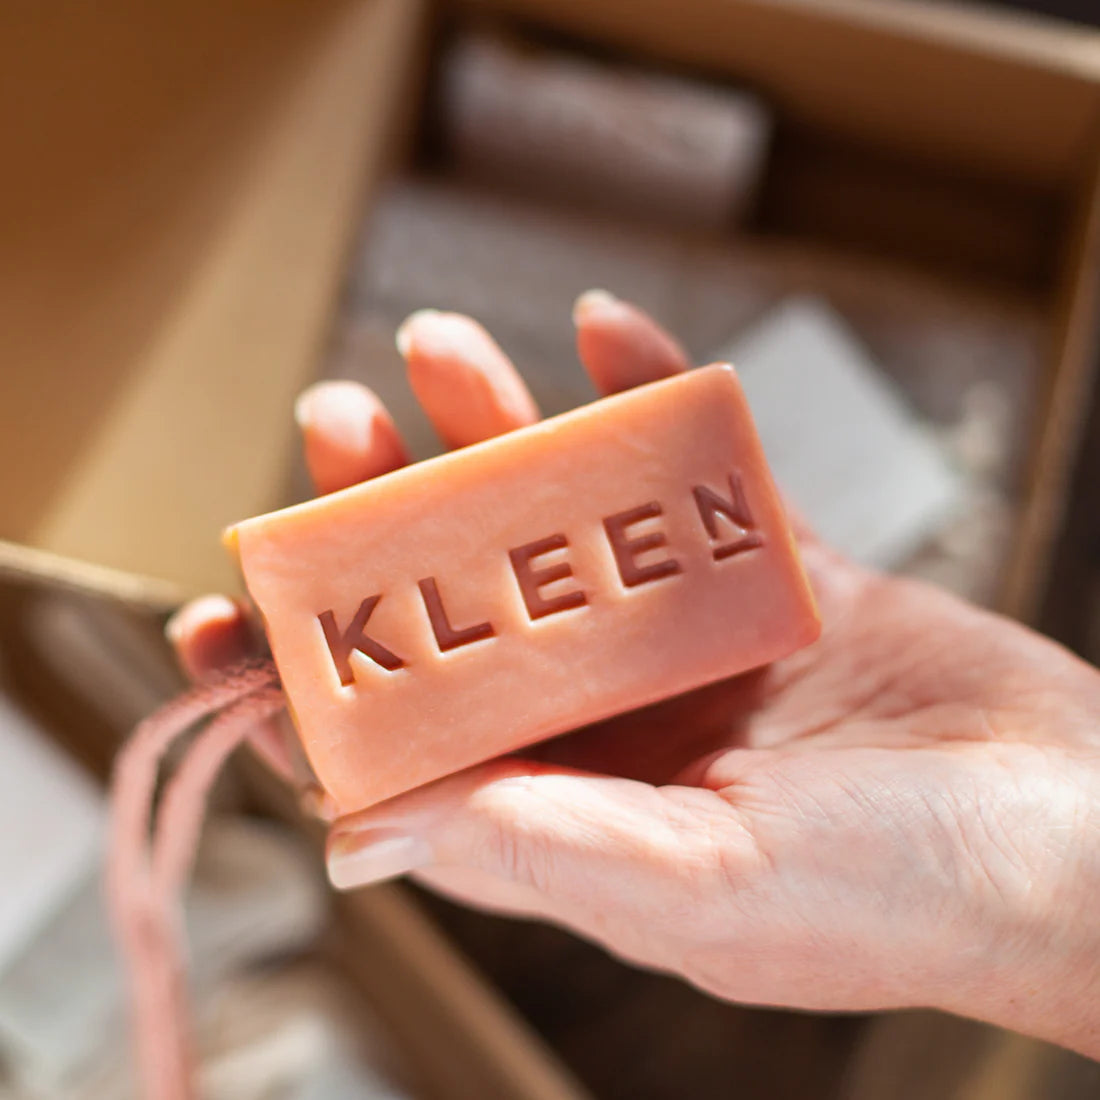 Kleen Soap - Good Vibrations